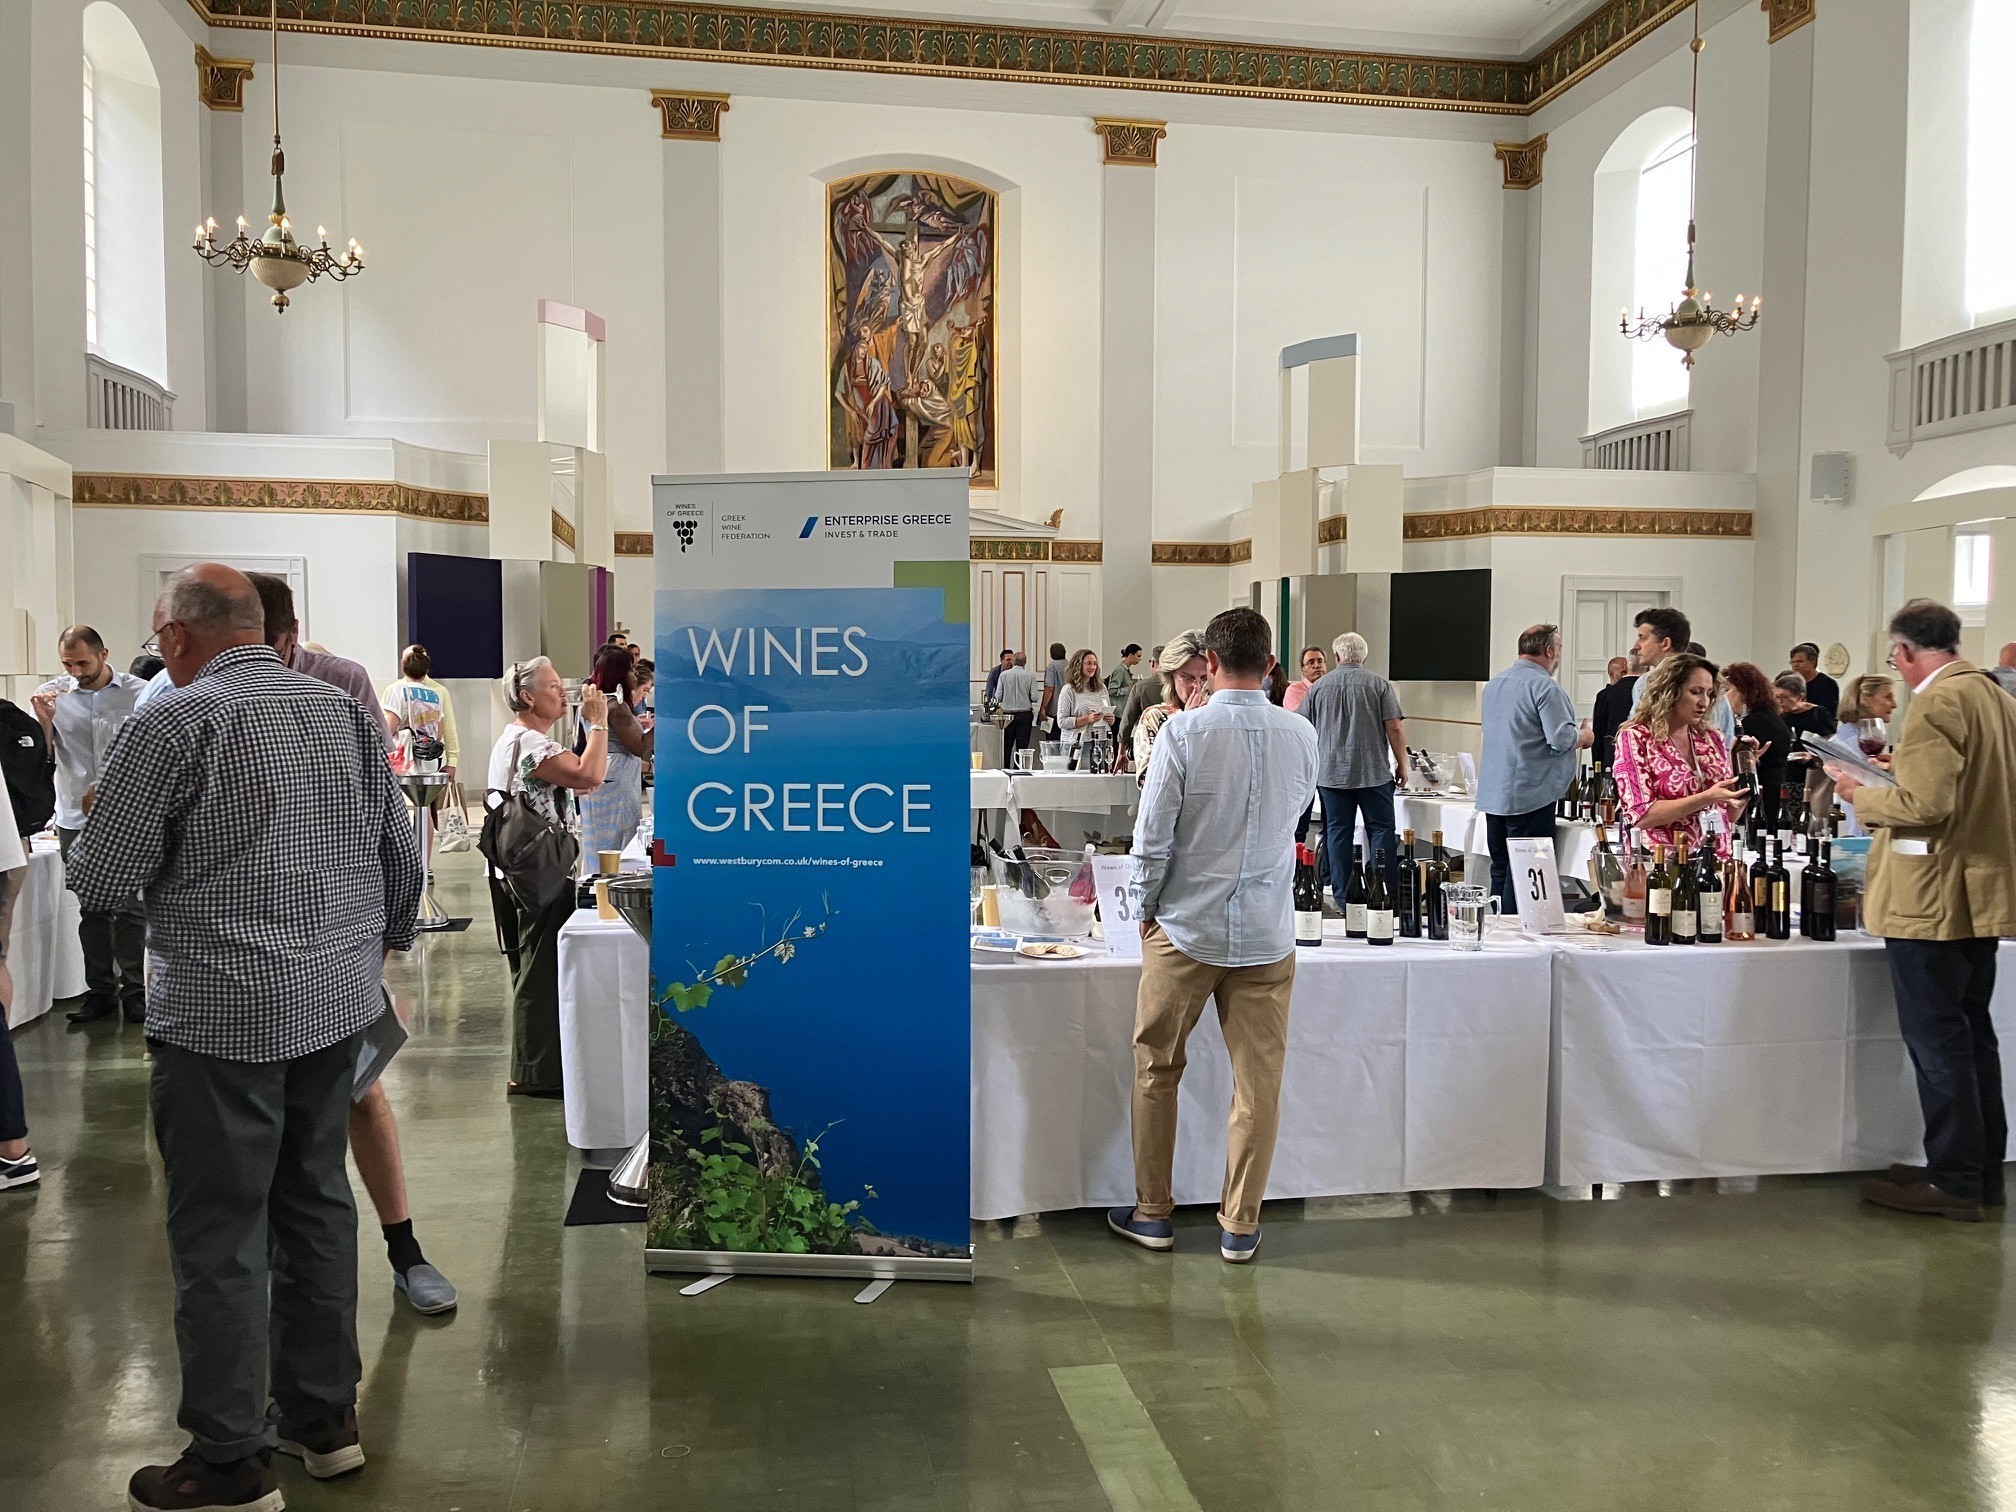 Wines of Greece: Απόλυτα επιτυχημένες οι εκδηλώσεις σε Λονδίνο και Εδιμβούργο (pics)